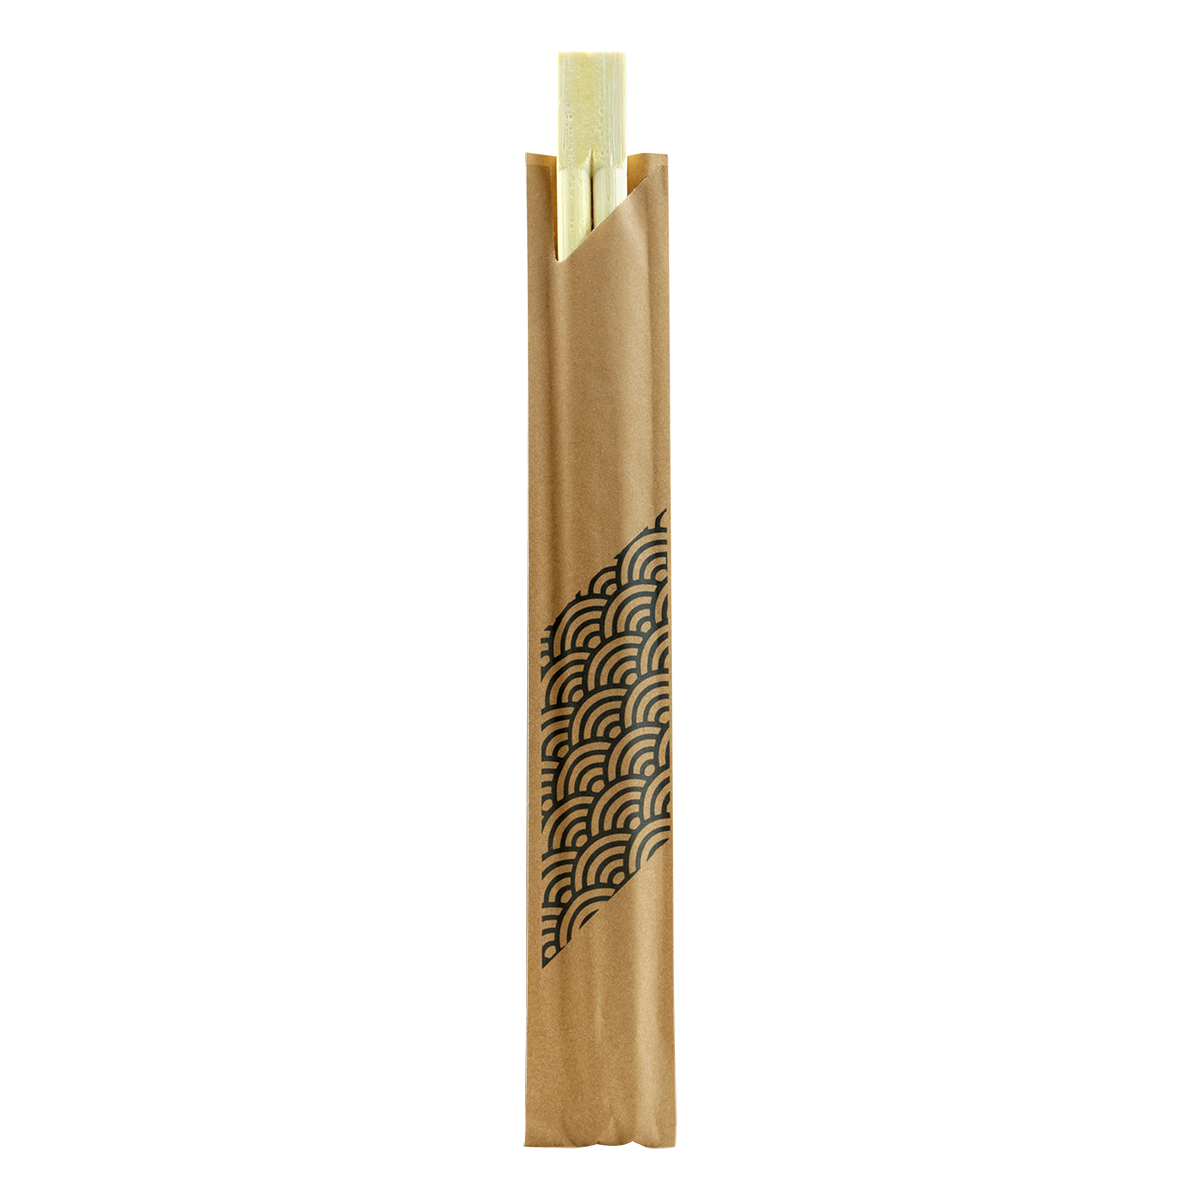 Betisoare bambus - Betisoare din bambus cu ambalaj 21cm (100buc), asianfood.ro